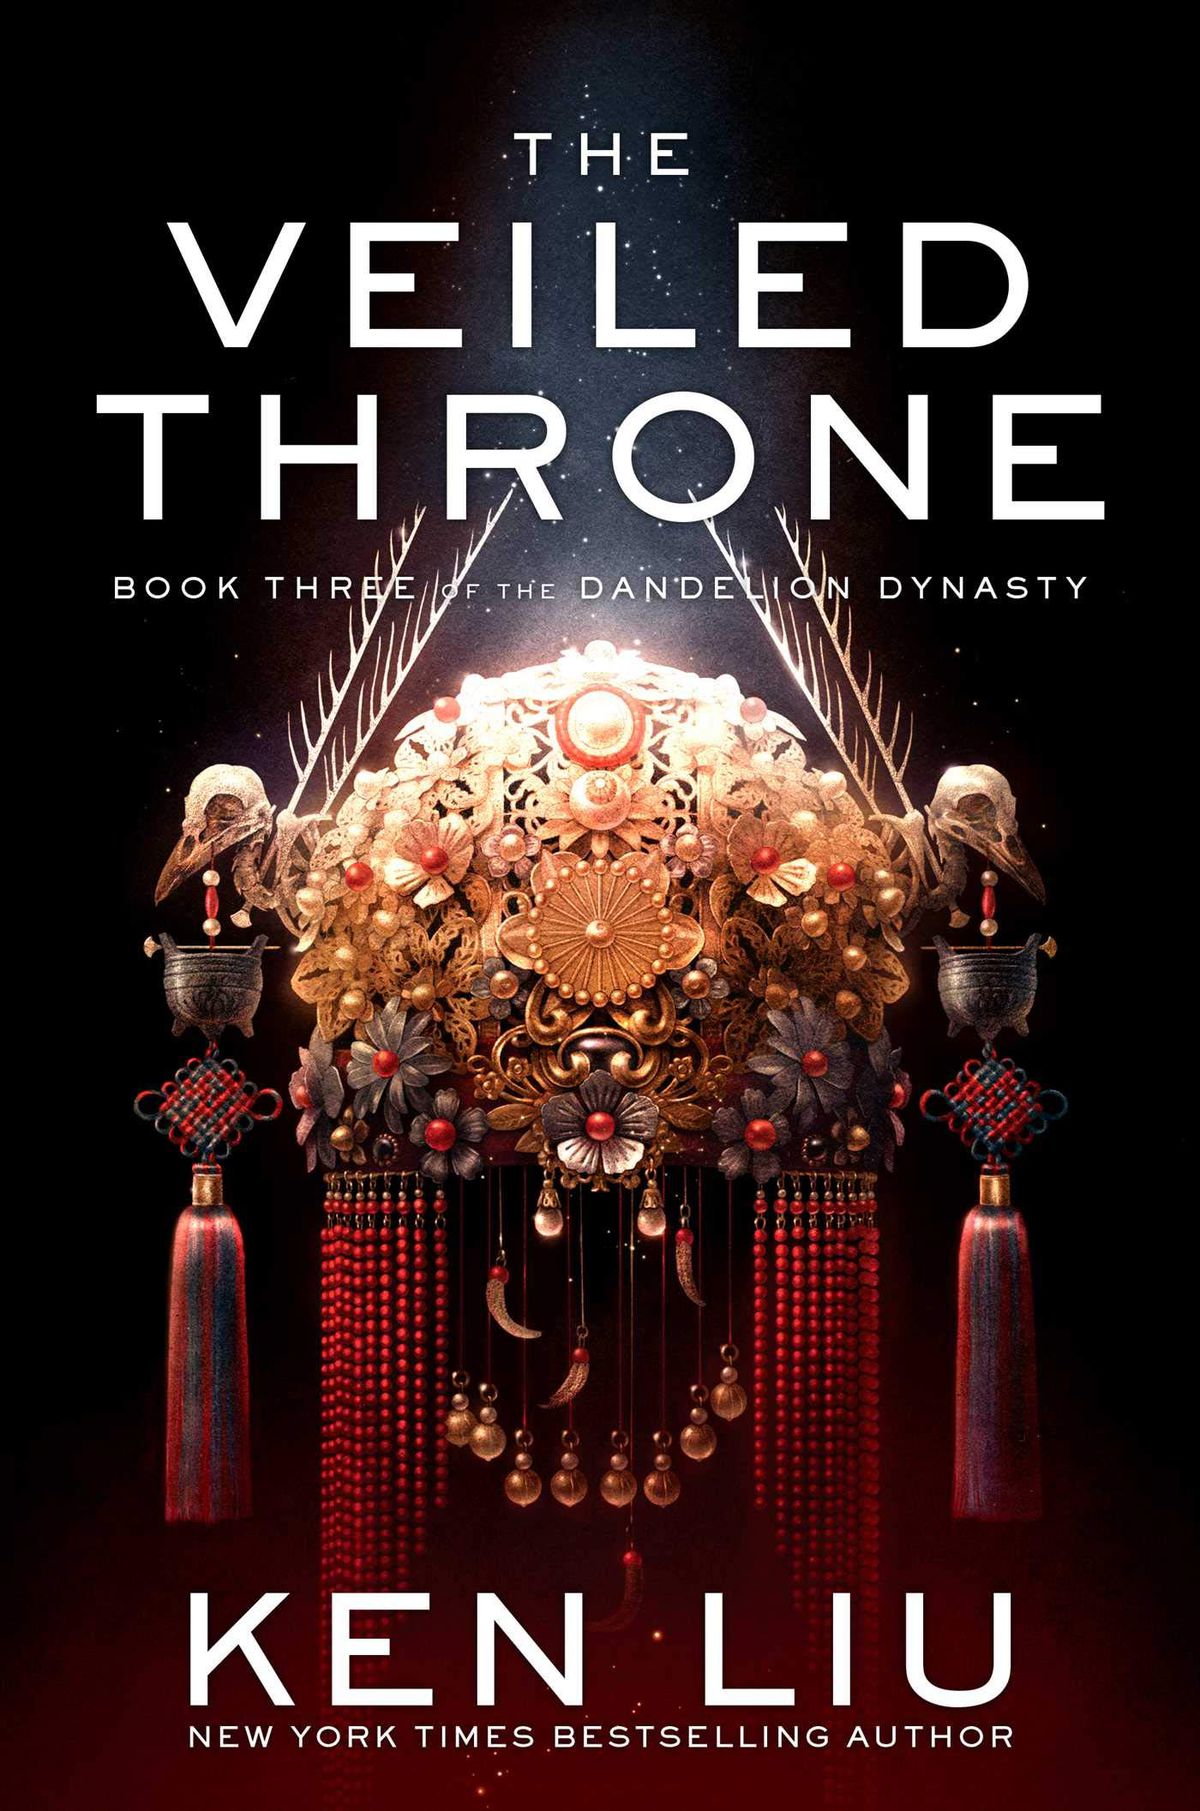 The Veiled Throne by Ken Liu book cover